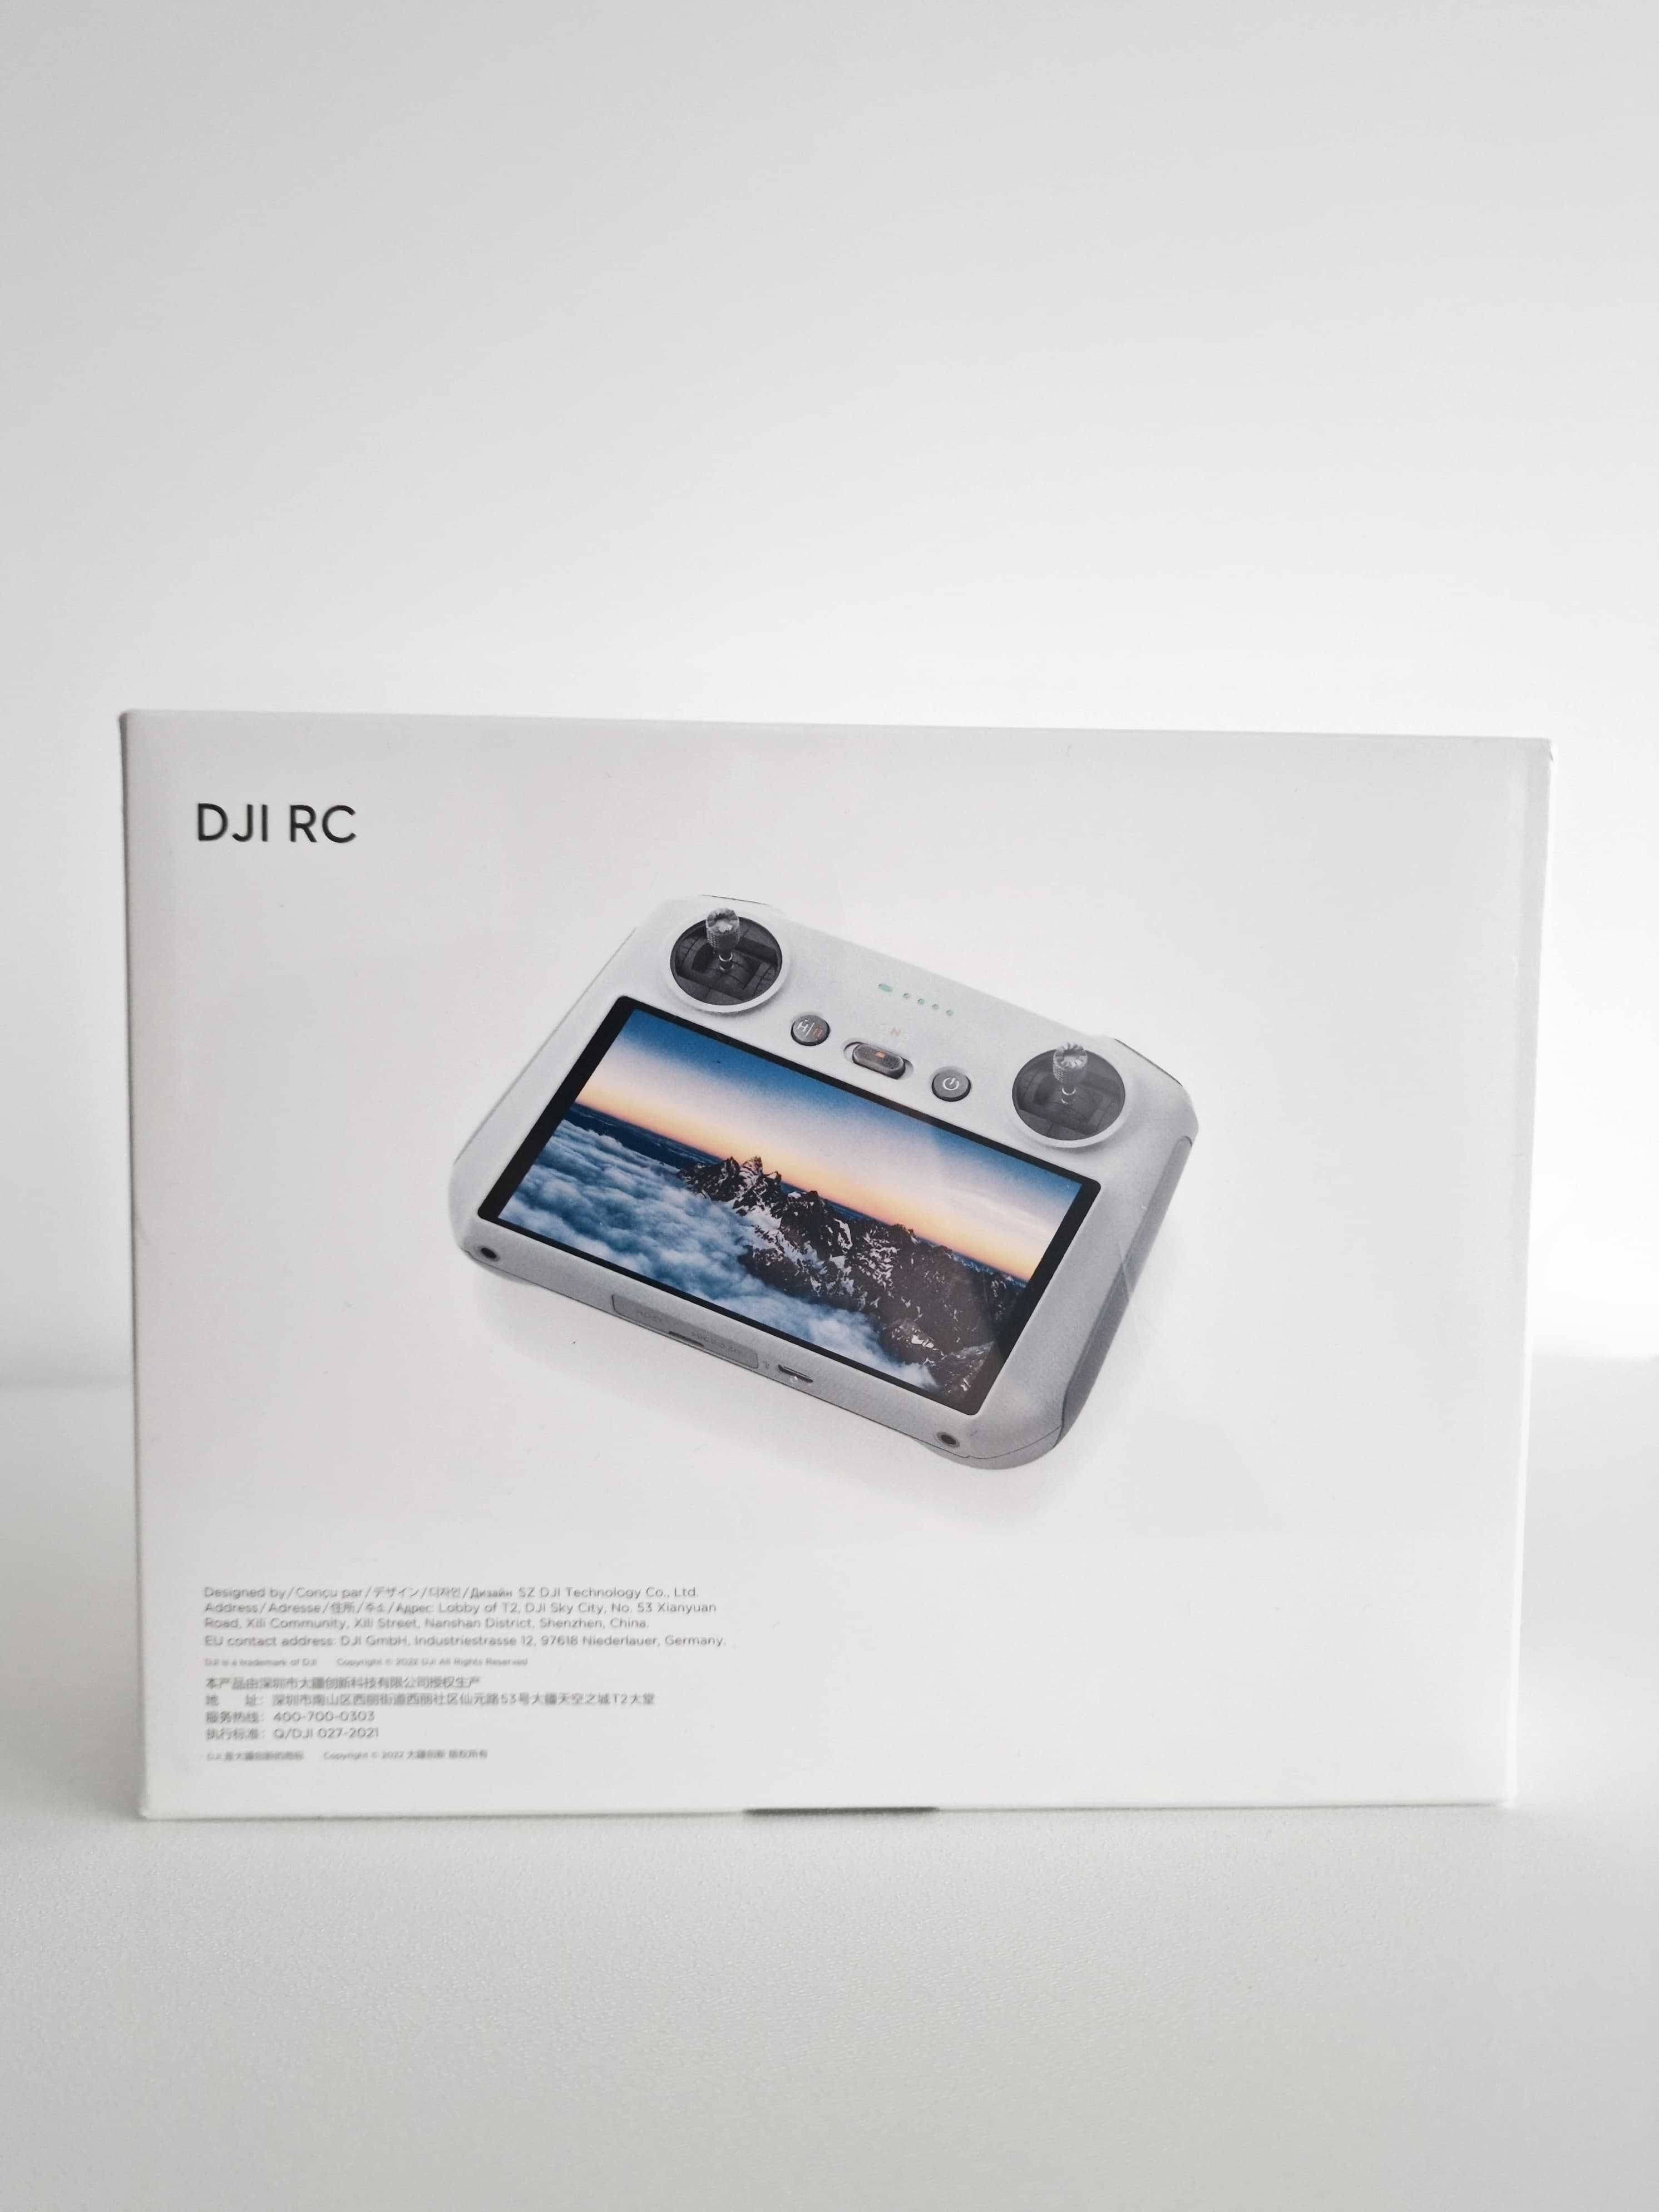 DJI RC Controller pentru Drone DJI* FACTURA * GARANTIE